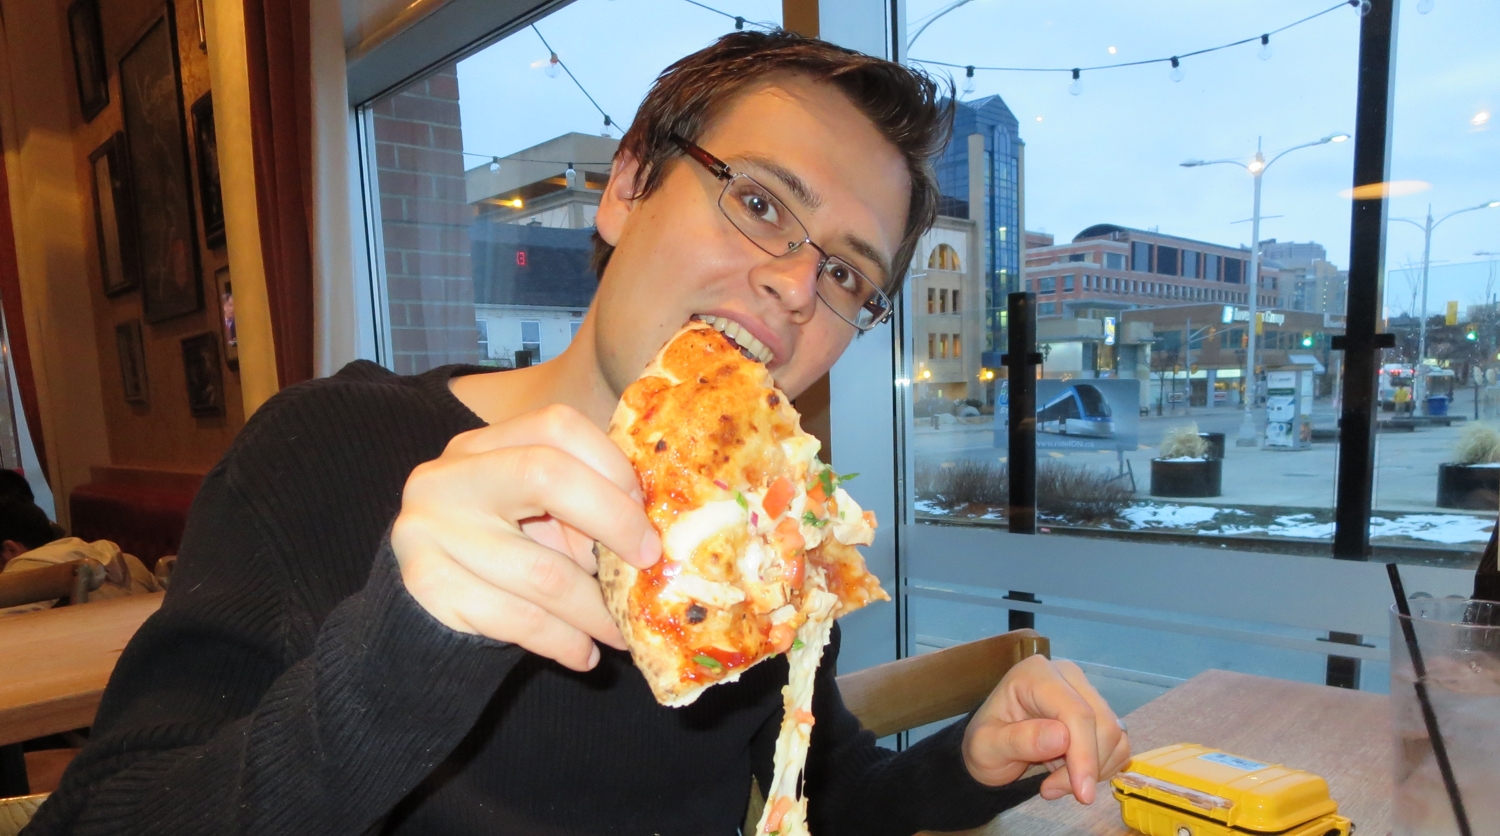 Matt chowing down on pizza.